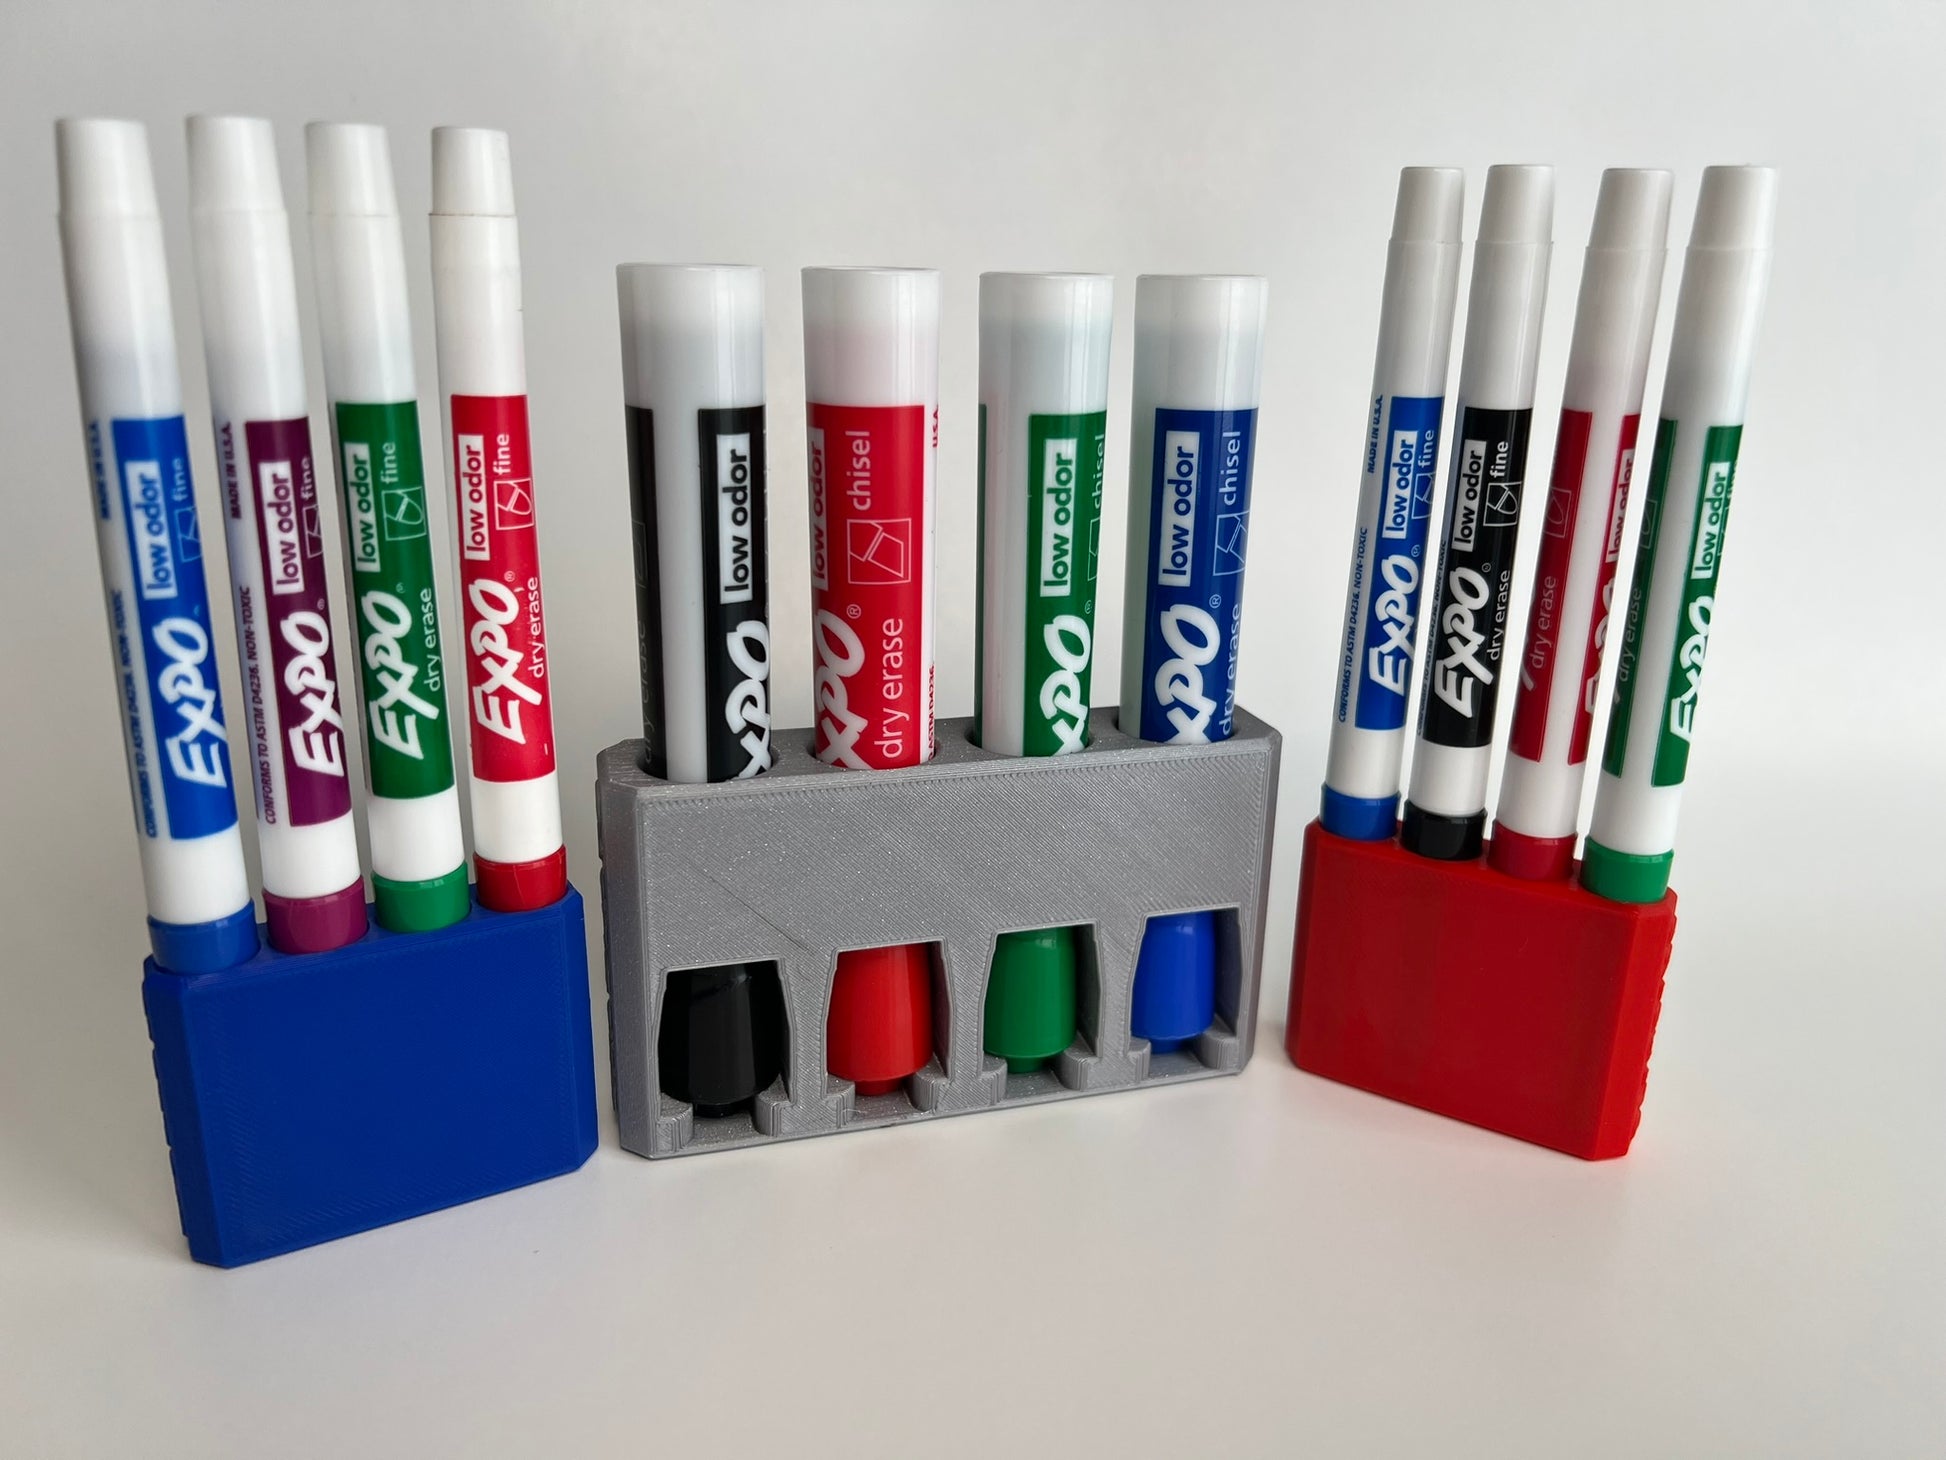 Odoriferous Marker-Making Kits : marker maker